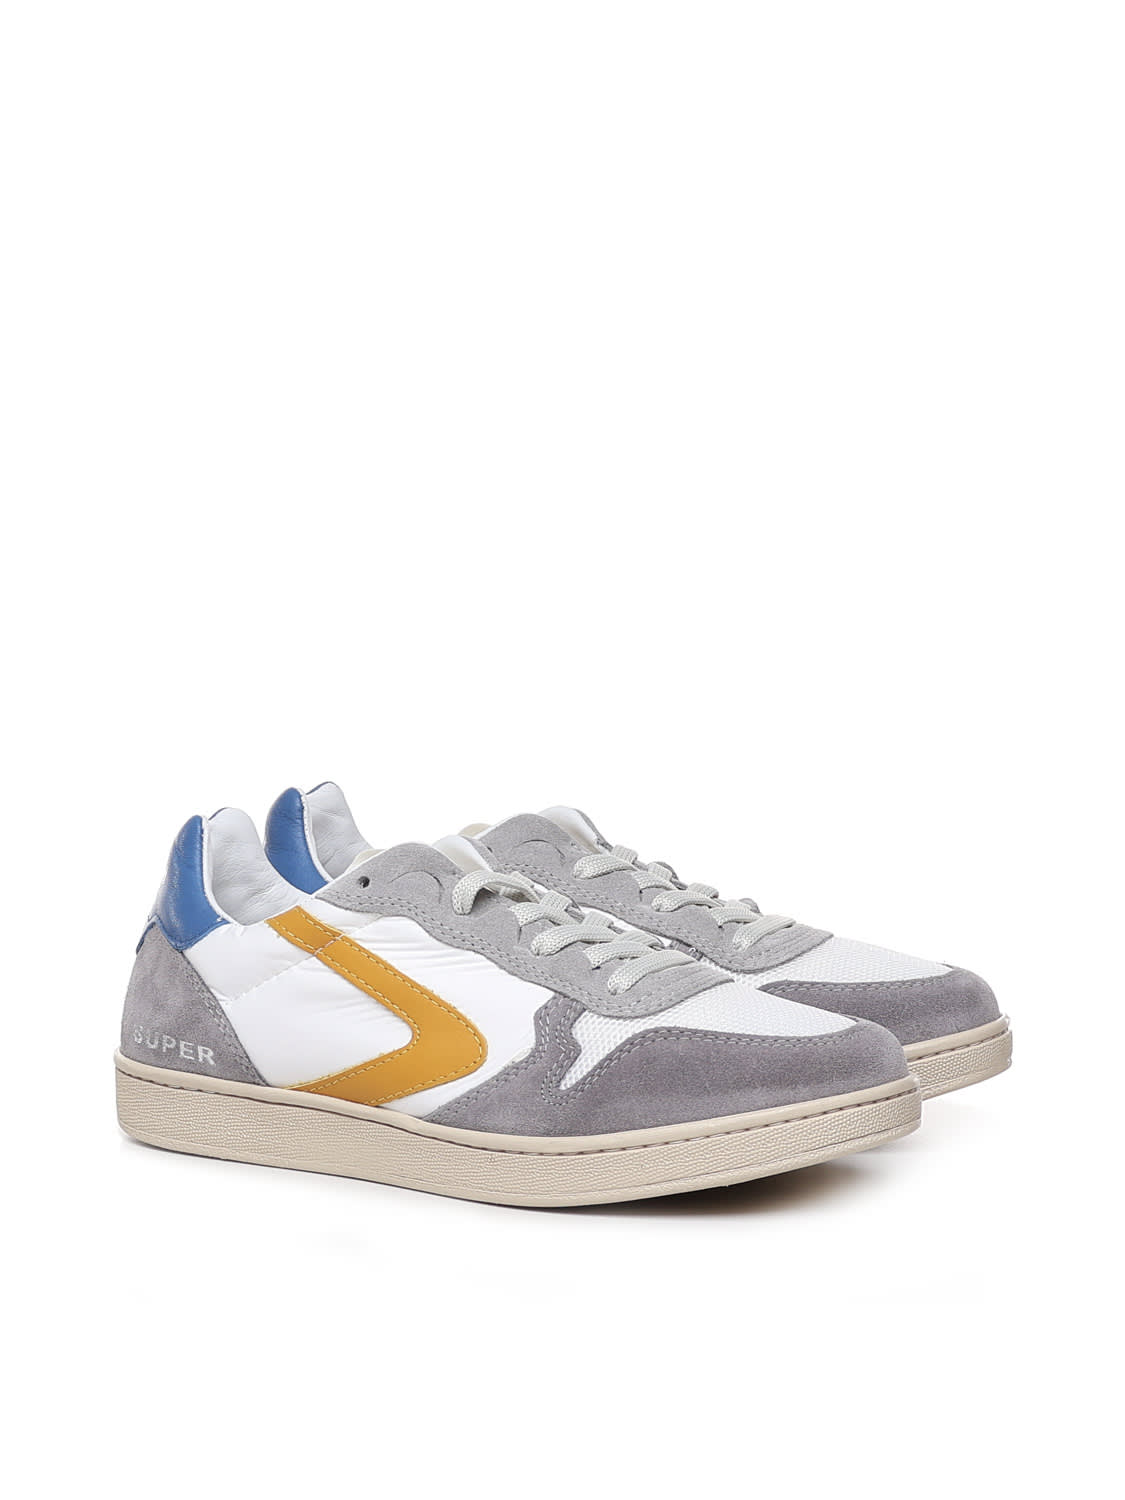 Shop Valsport Super 20 Sneakers In Grey, Blue, Yellow